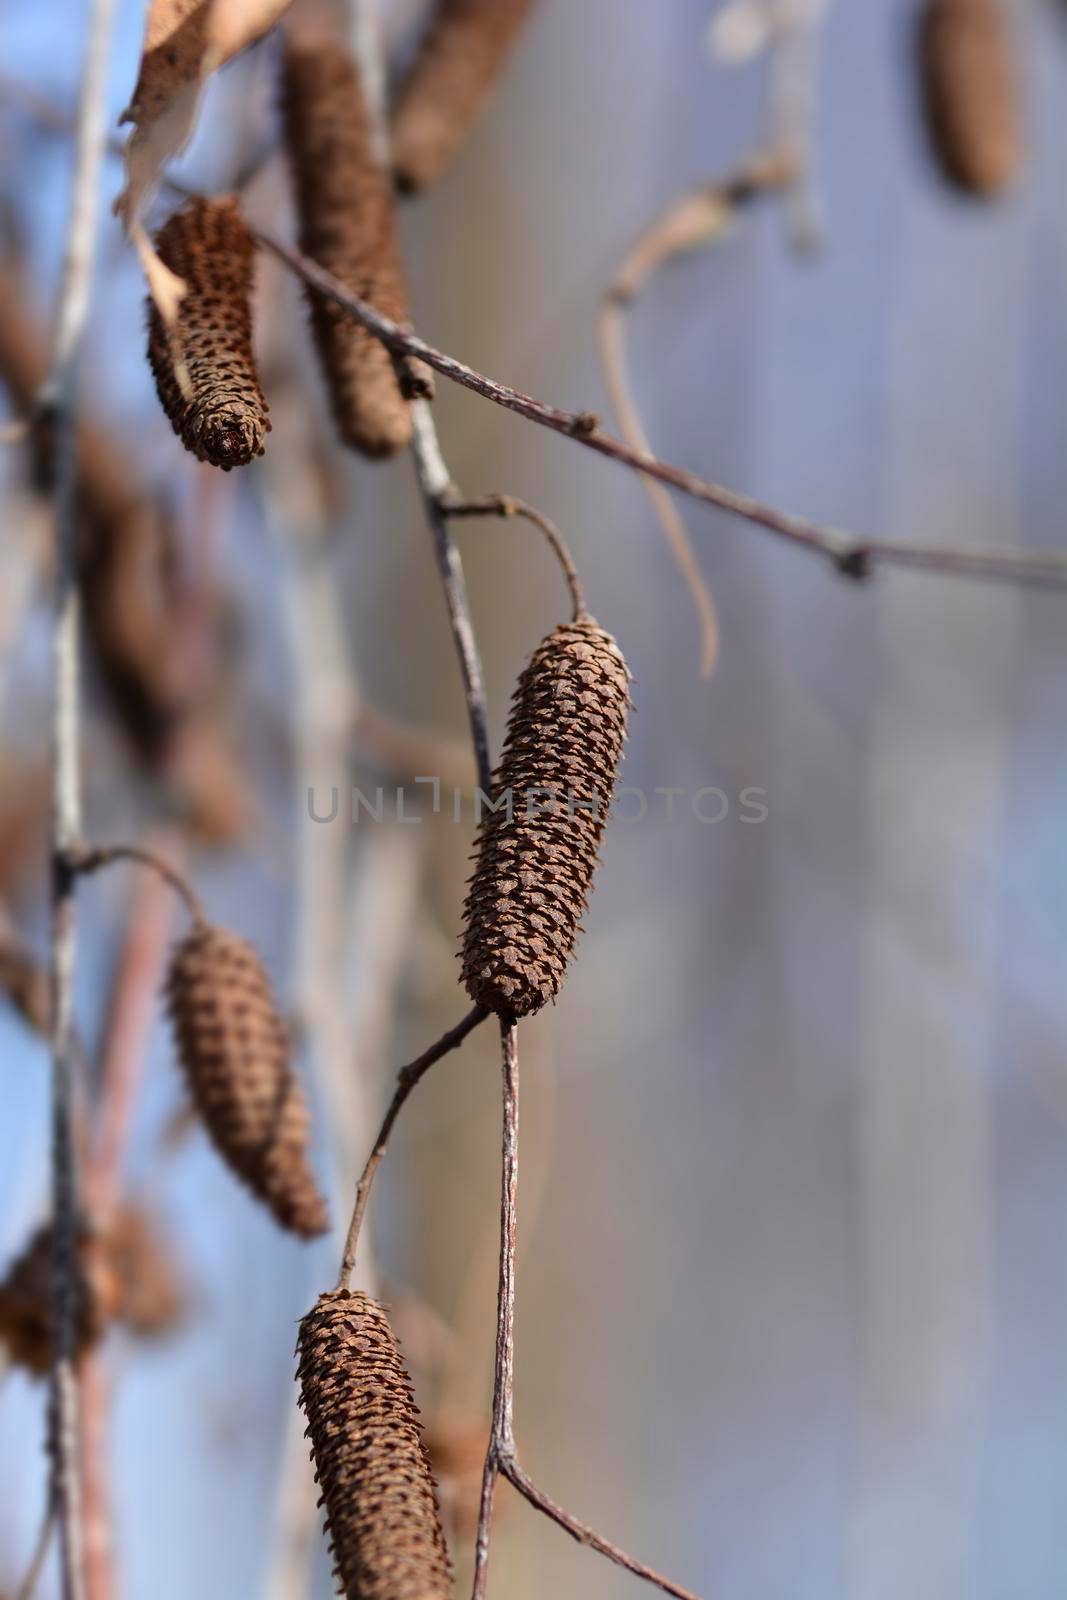 Common birch seeds - Latin name - Betula pendula